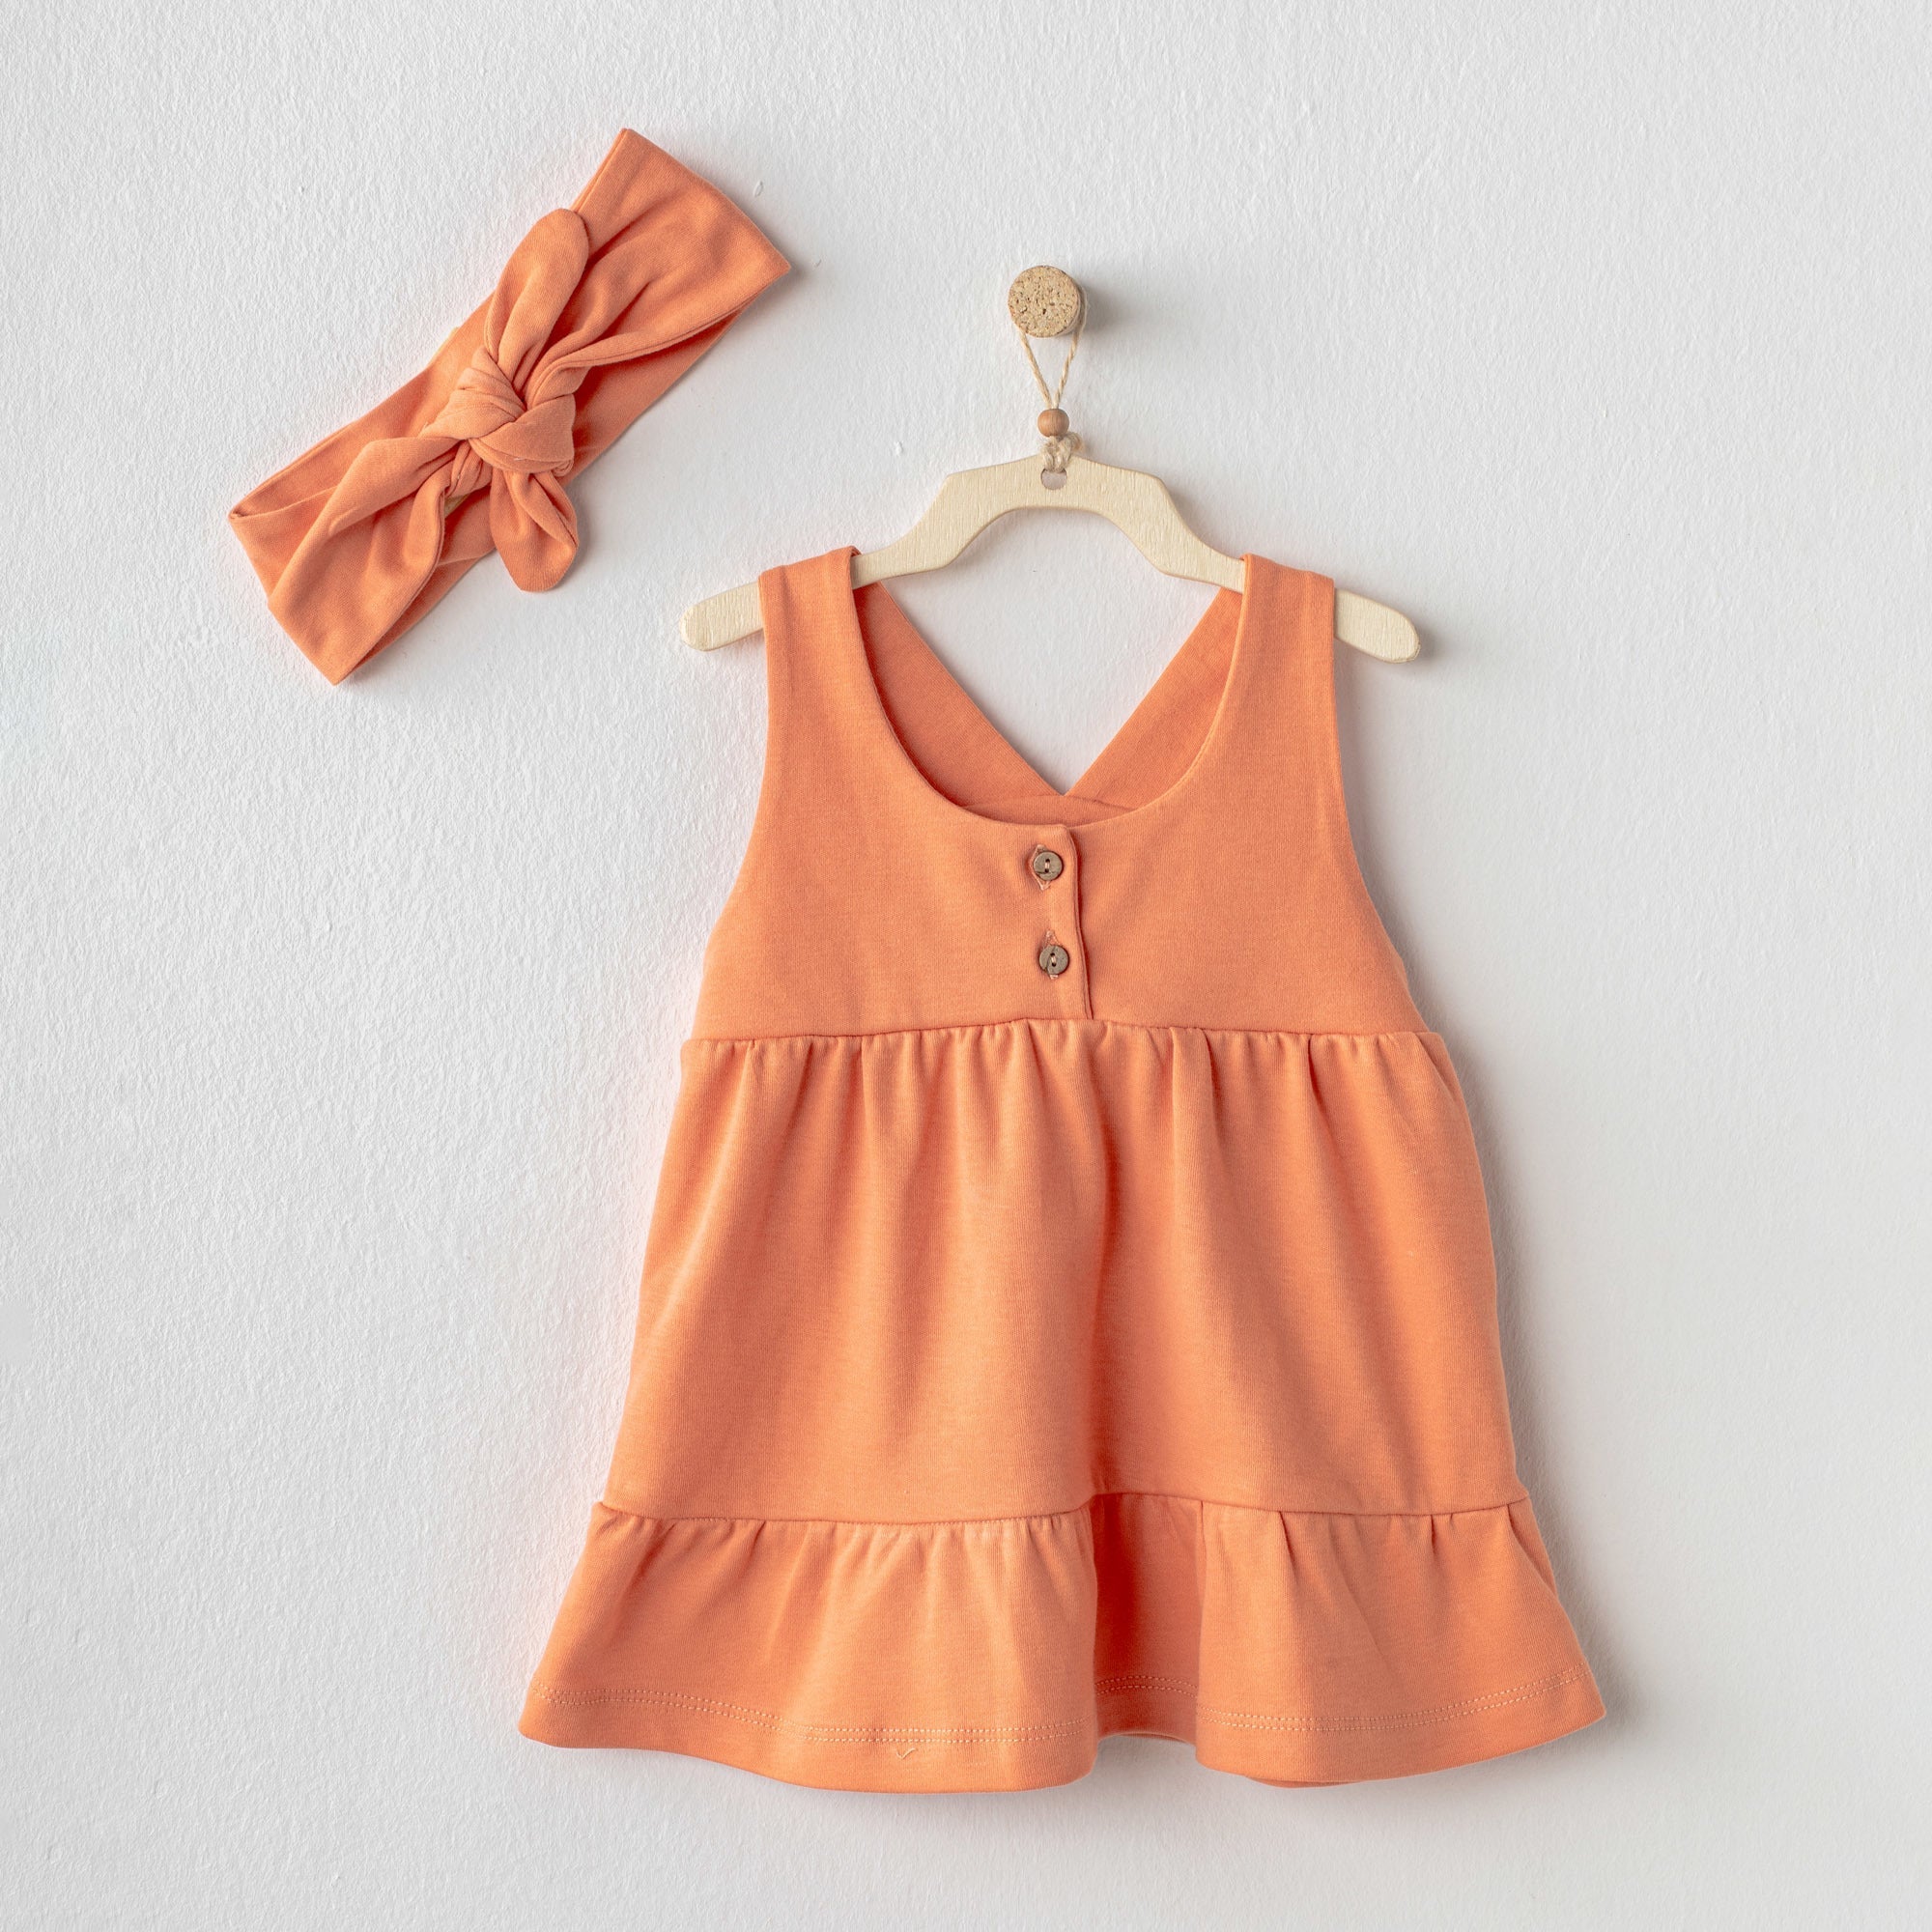 Classy Orange Plain Cotton Dress & Bandana